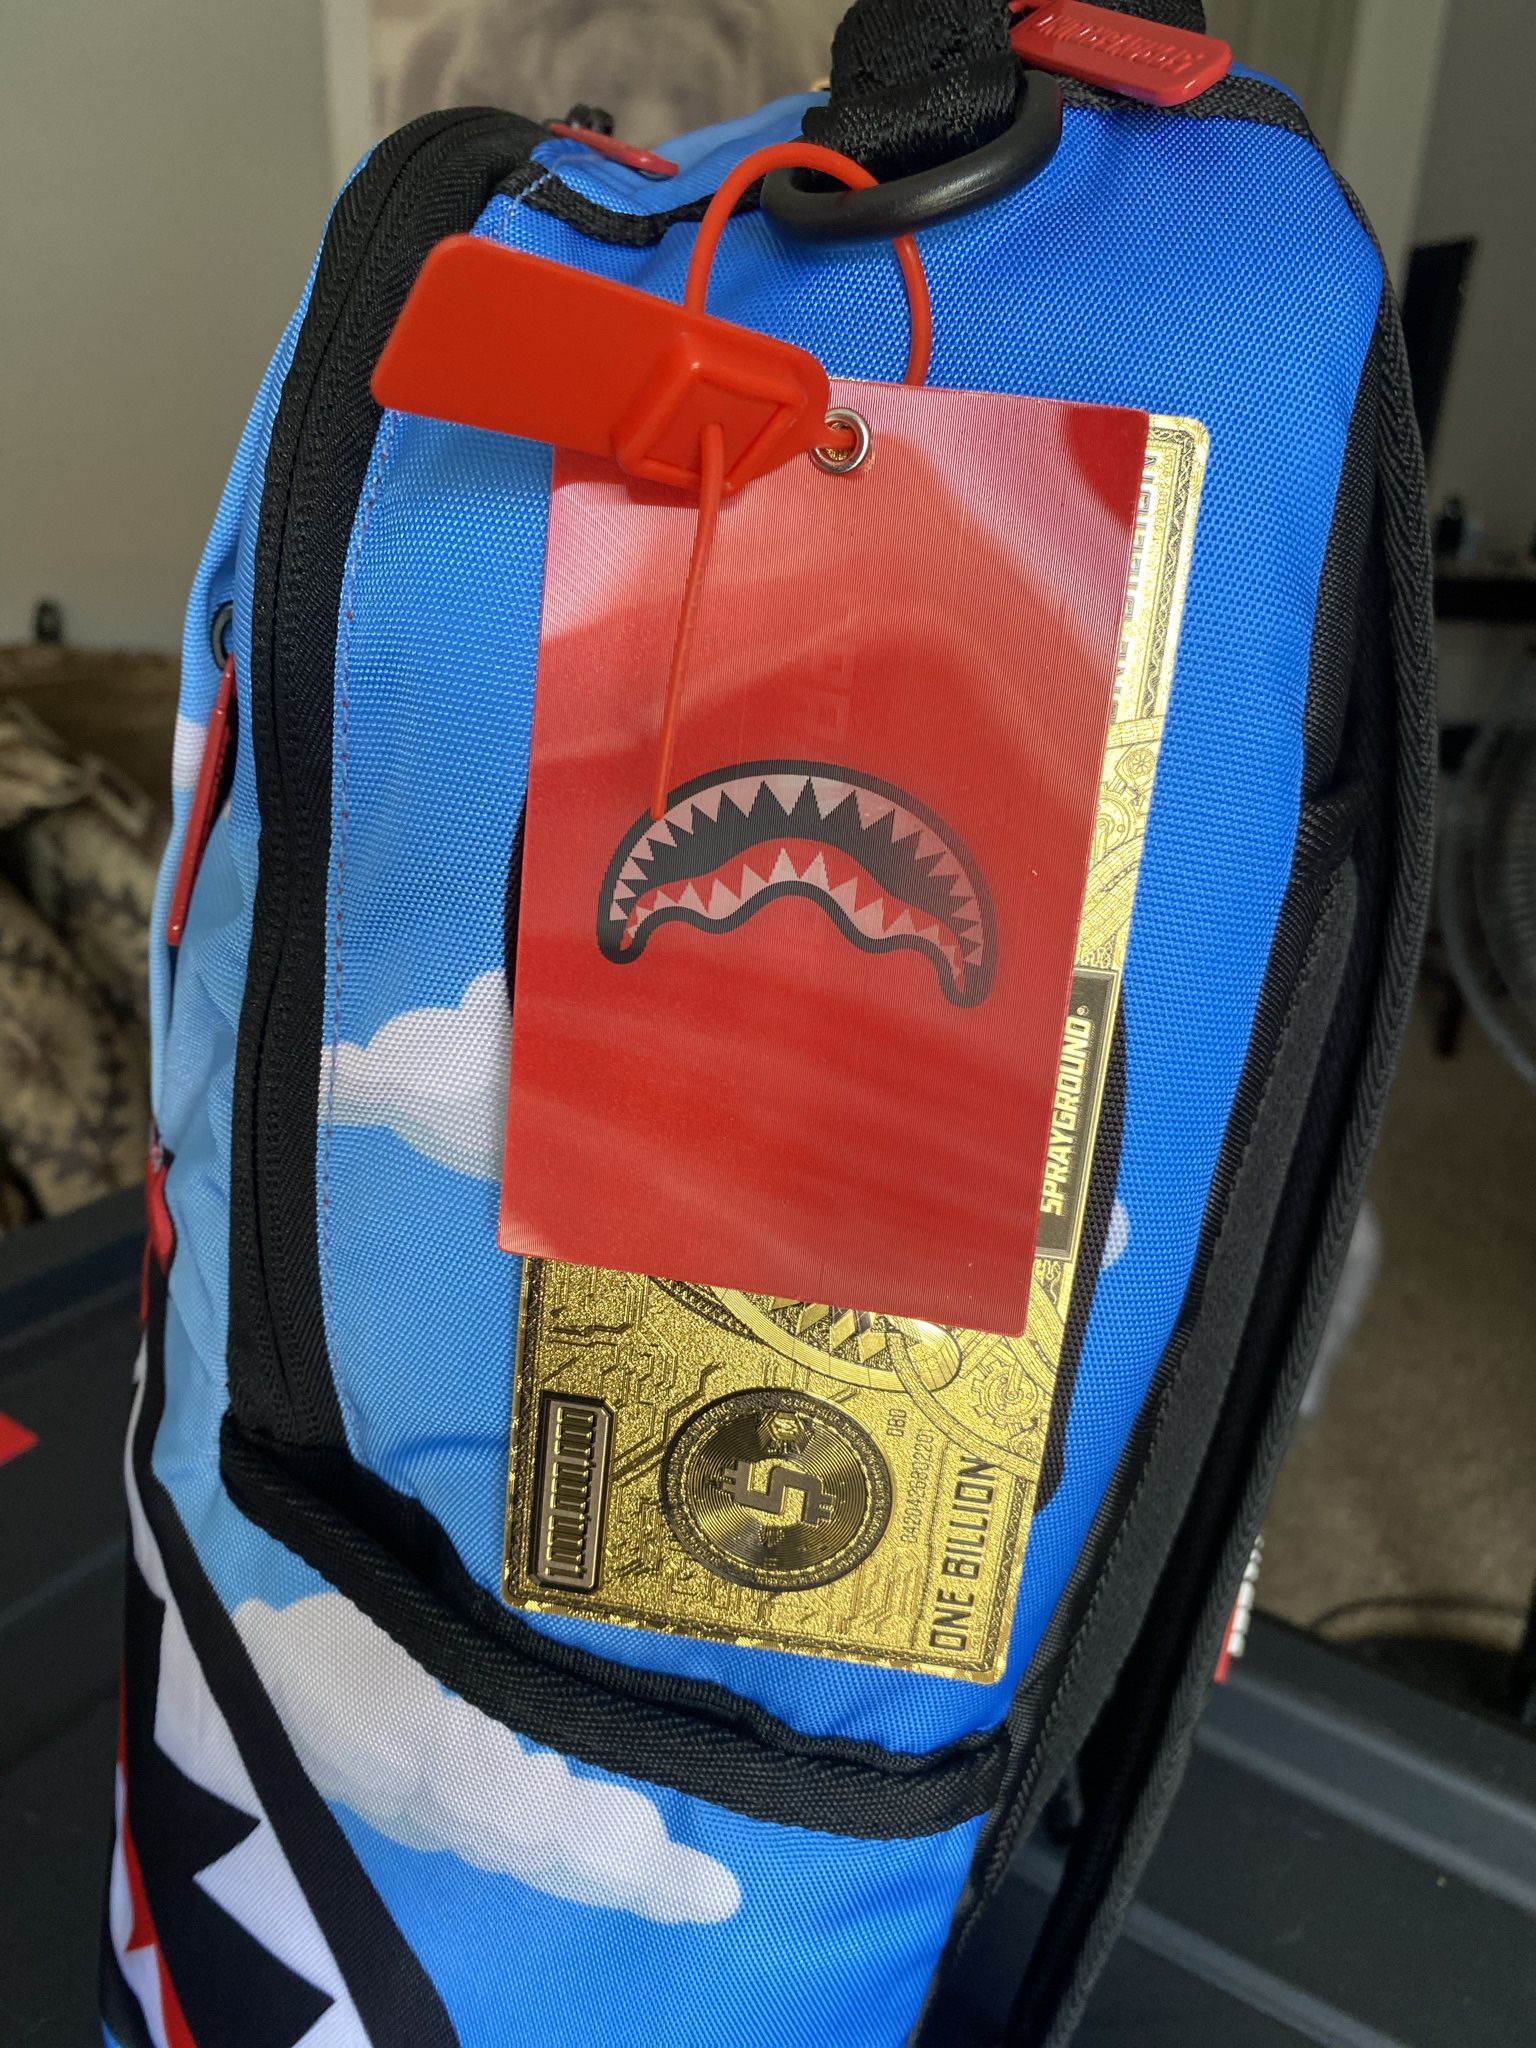 Platinum Drips Sprayground backpack for Sale in Cibolo, TX - OfferUp